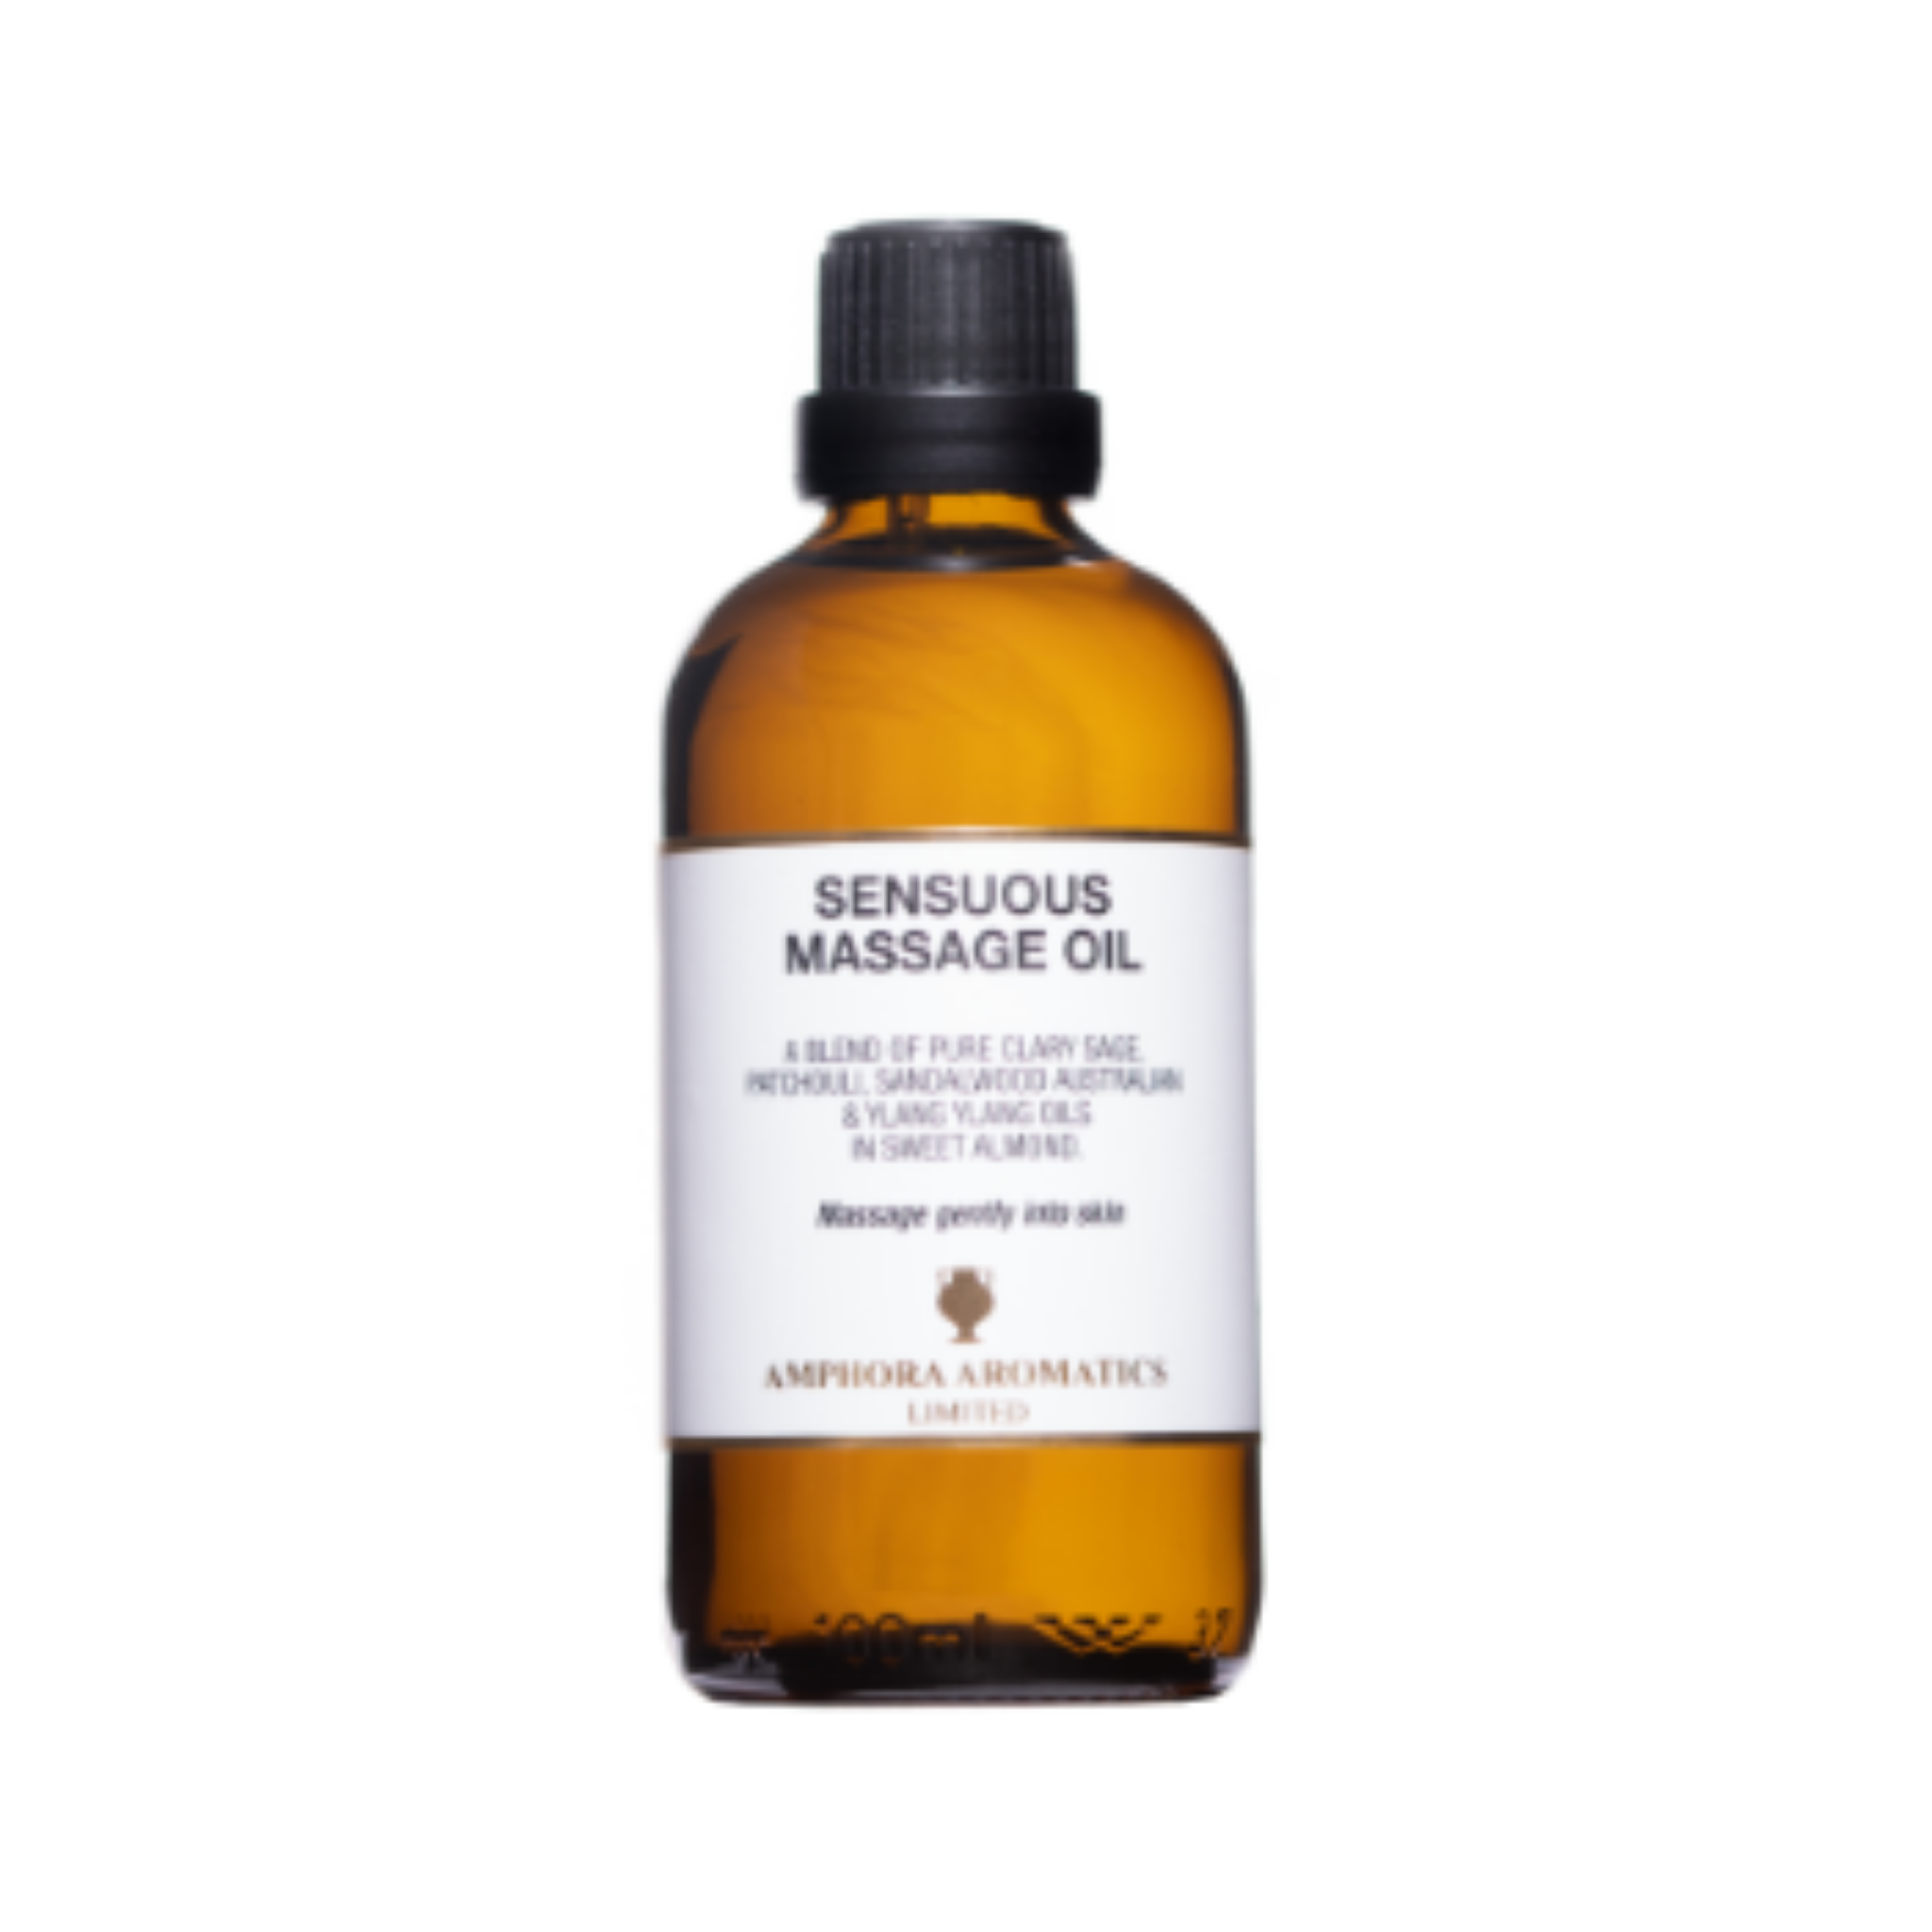 Sensuous Massage Oil by Amphora Aromatics